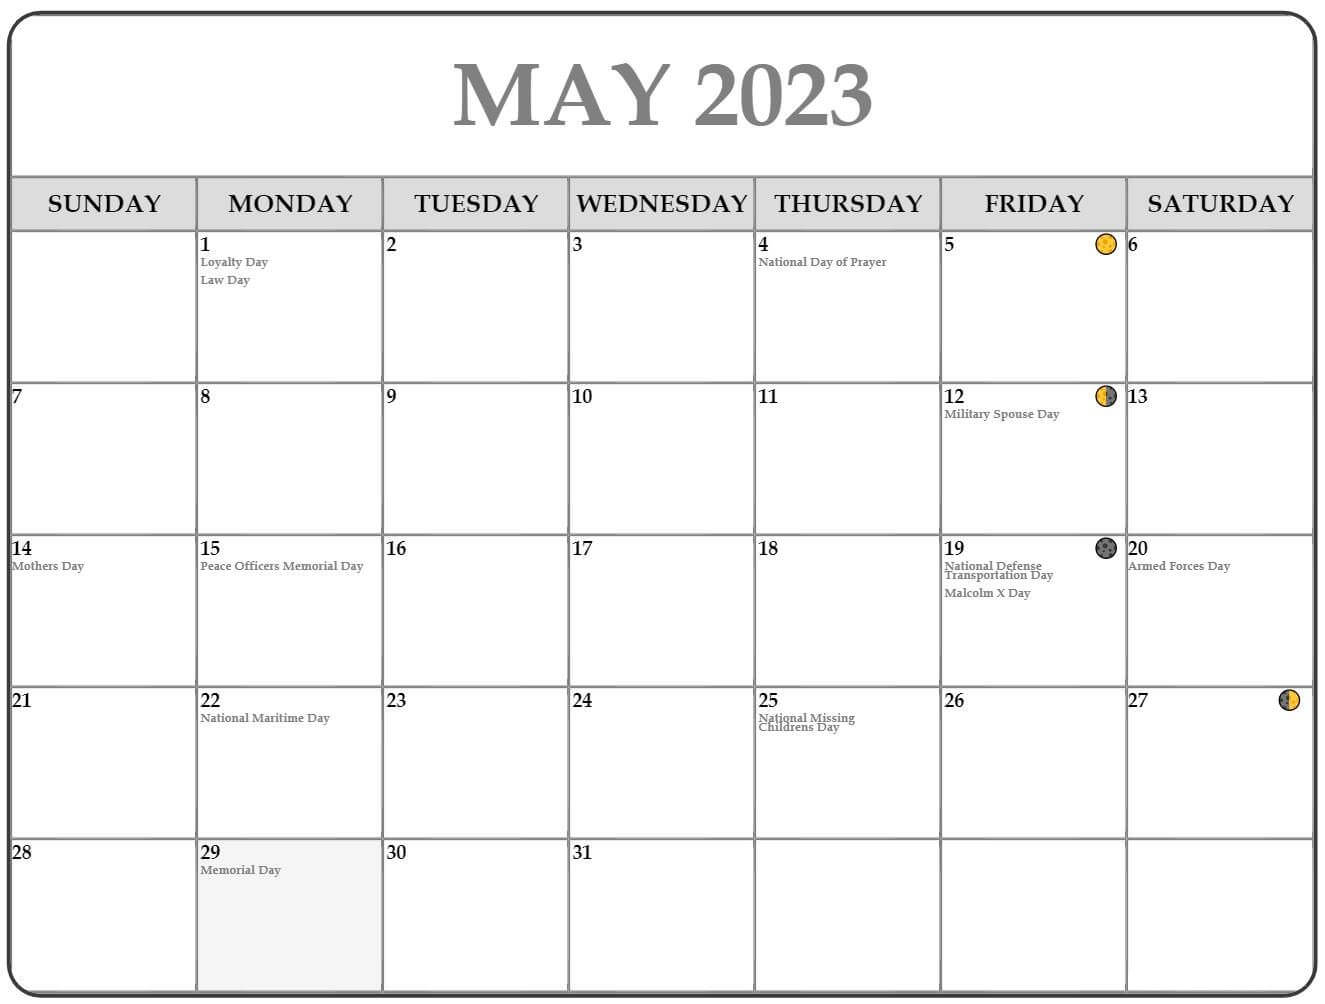 May 2023 Lunar Calendar Phases